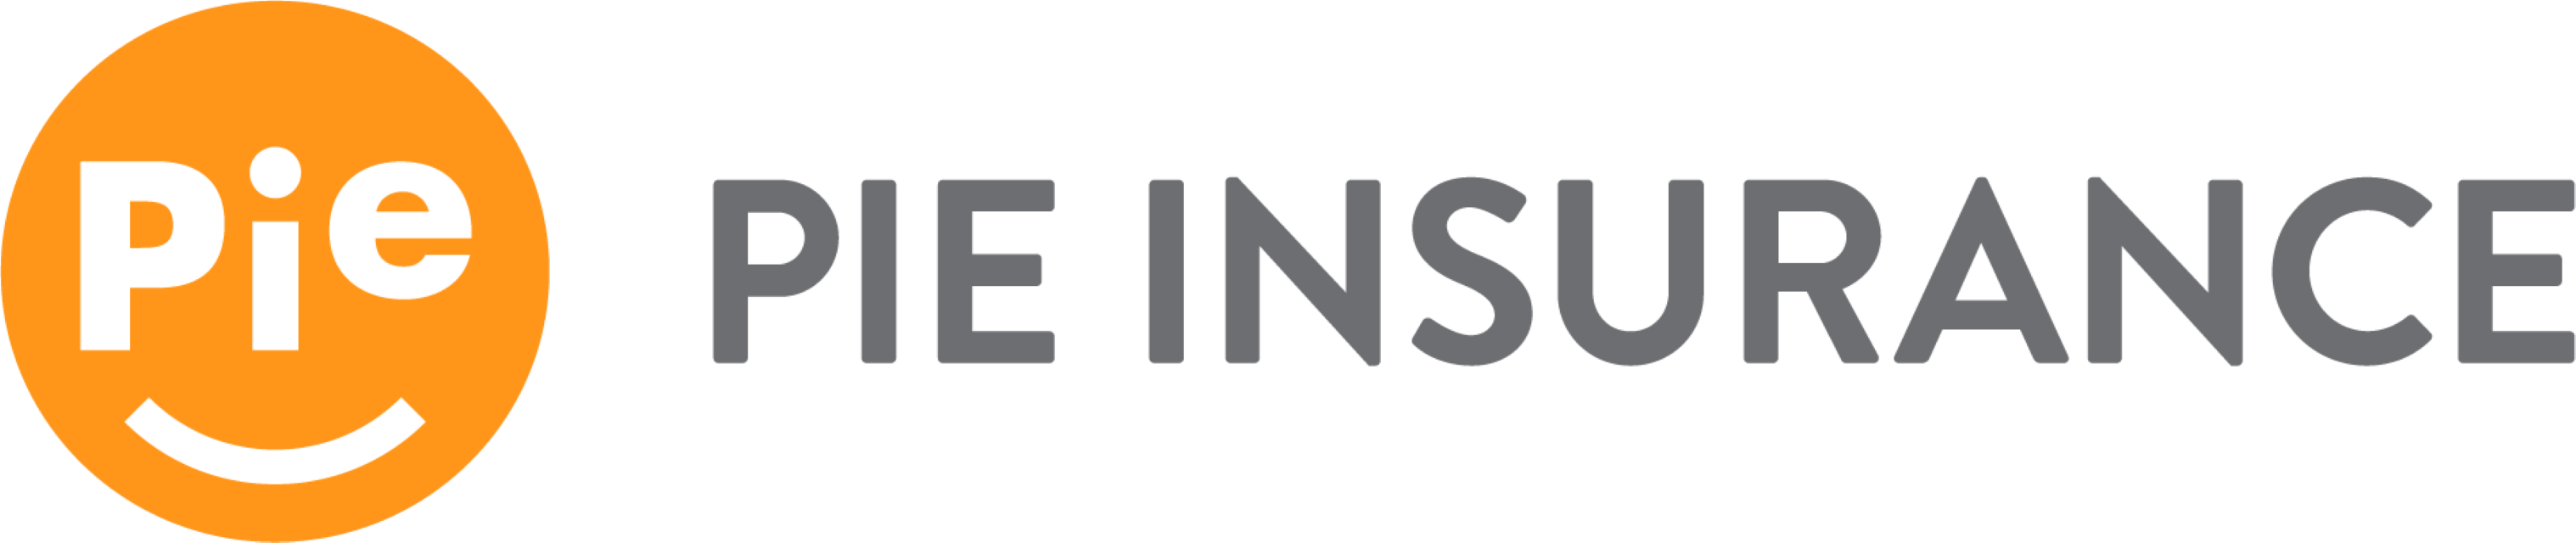 Pie Insurance Services Inc logo